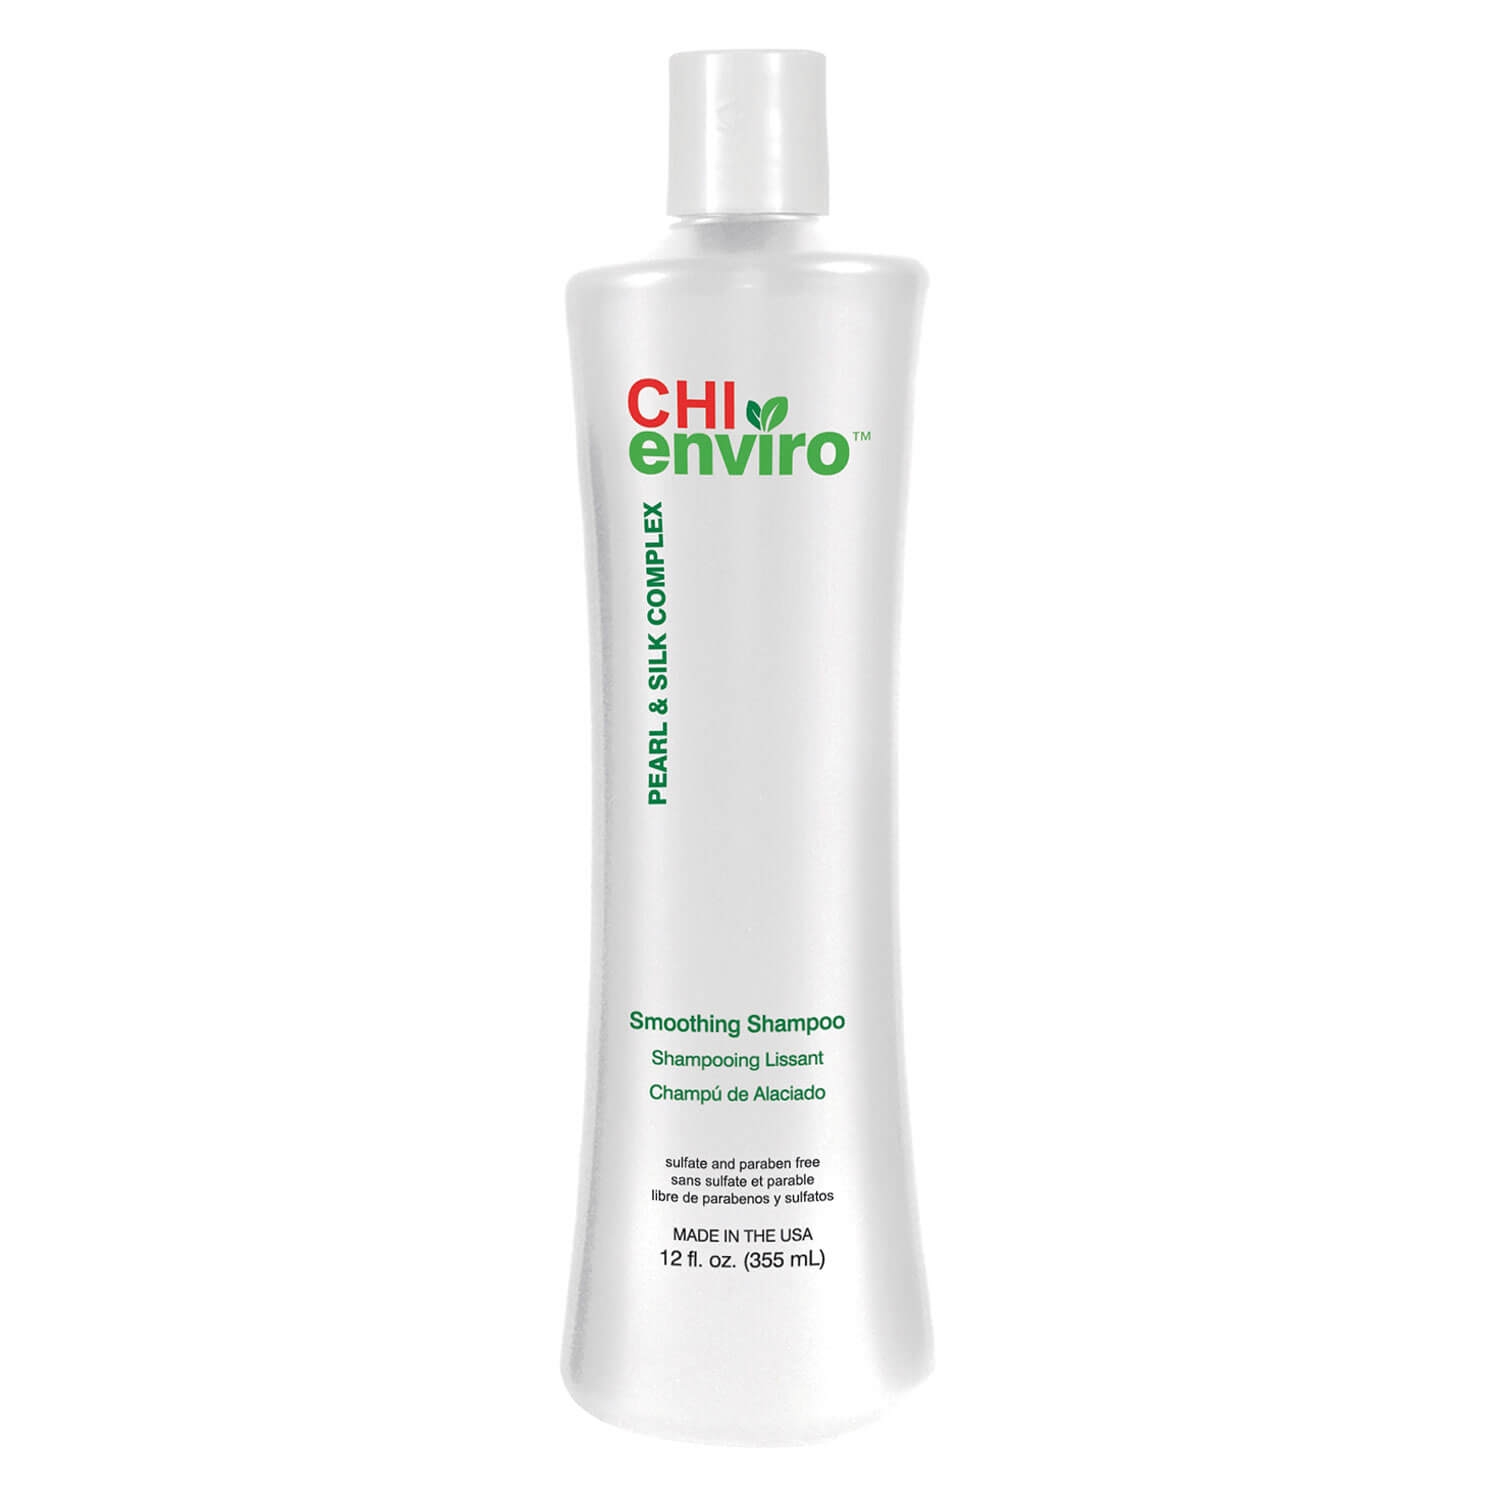 Product image from CHI enviro - Smoothing Shampoo